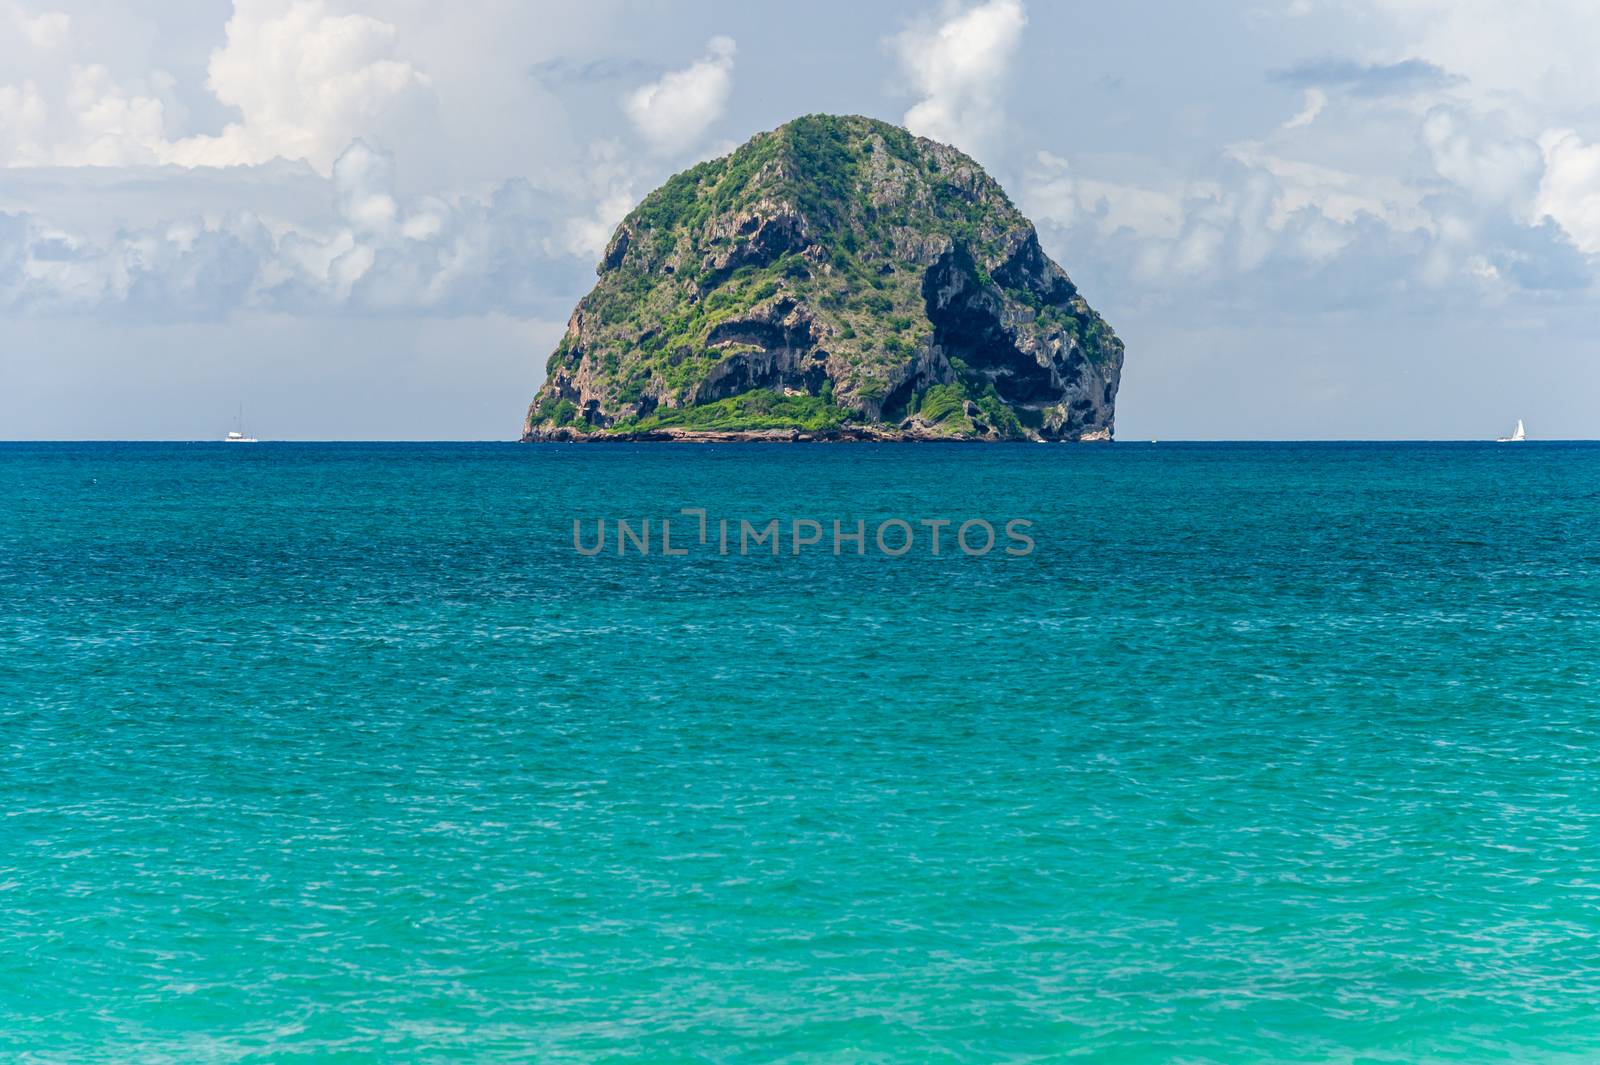 Rocher du Diamant (Diamond rock) in Martinique (August 2019)